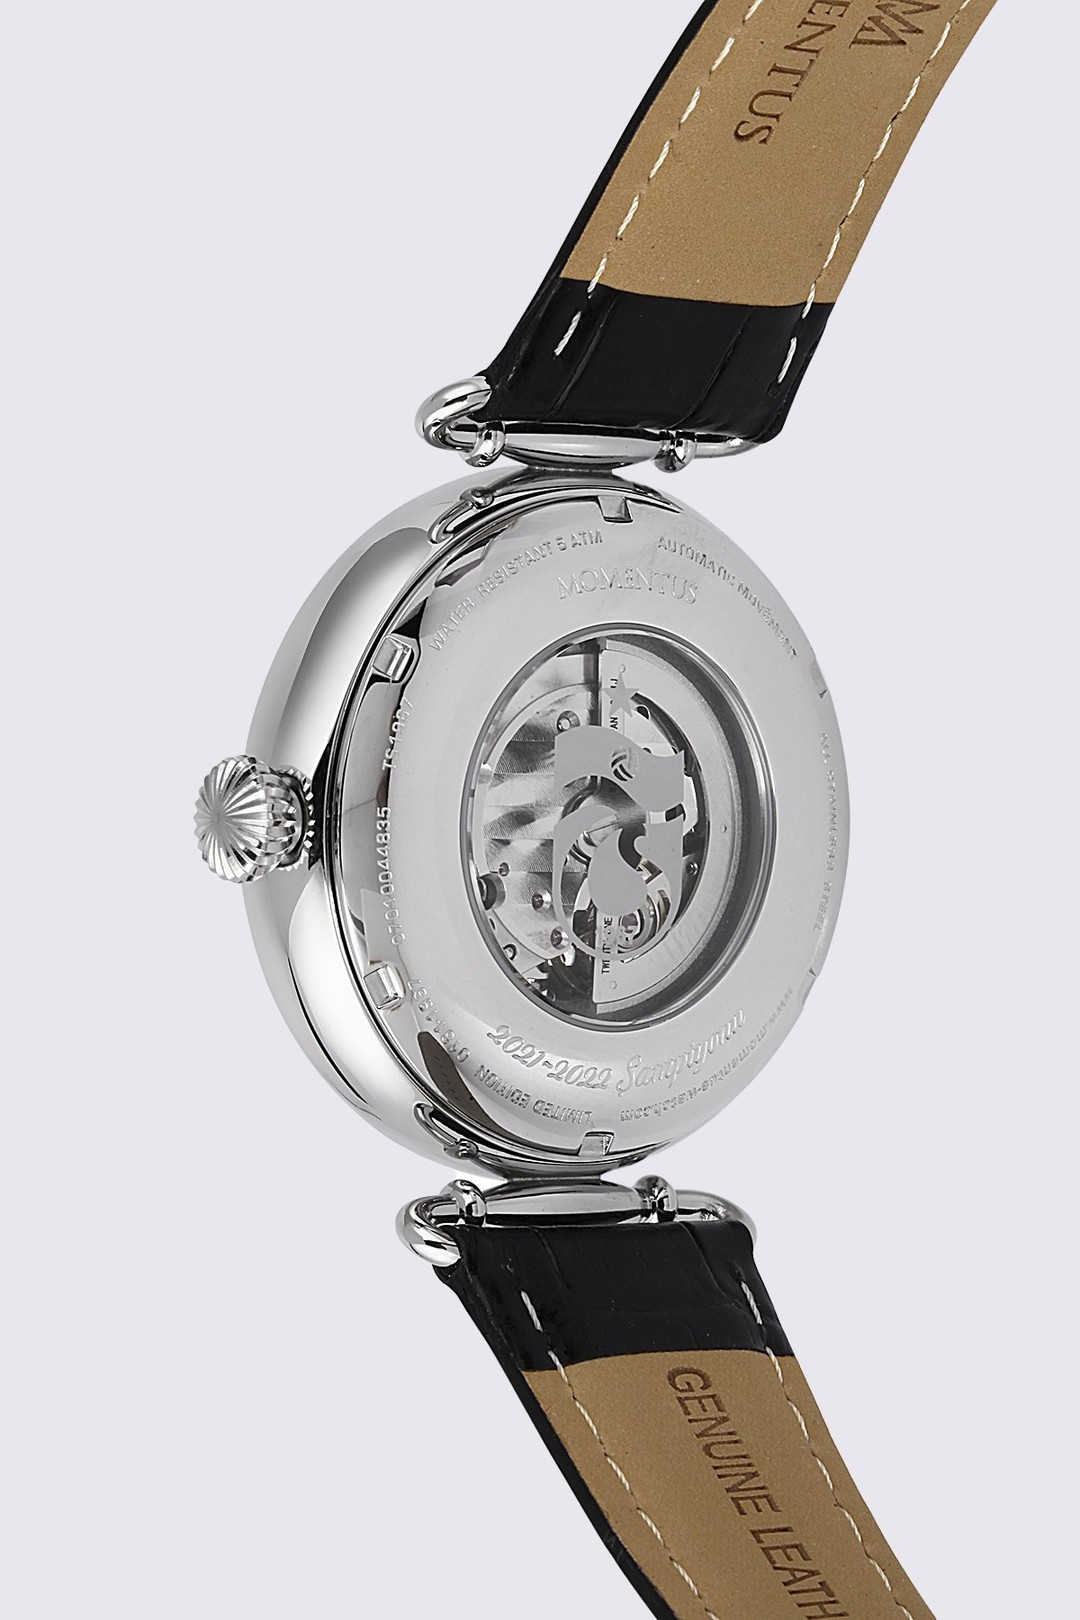 Wristwatch by Ted Baker London